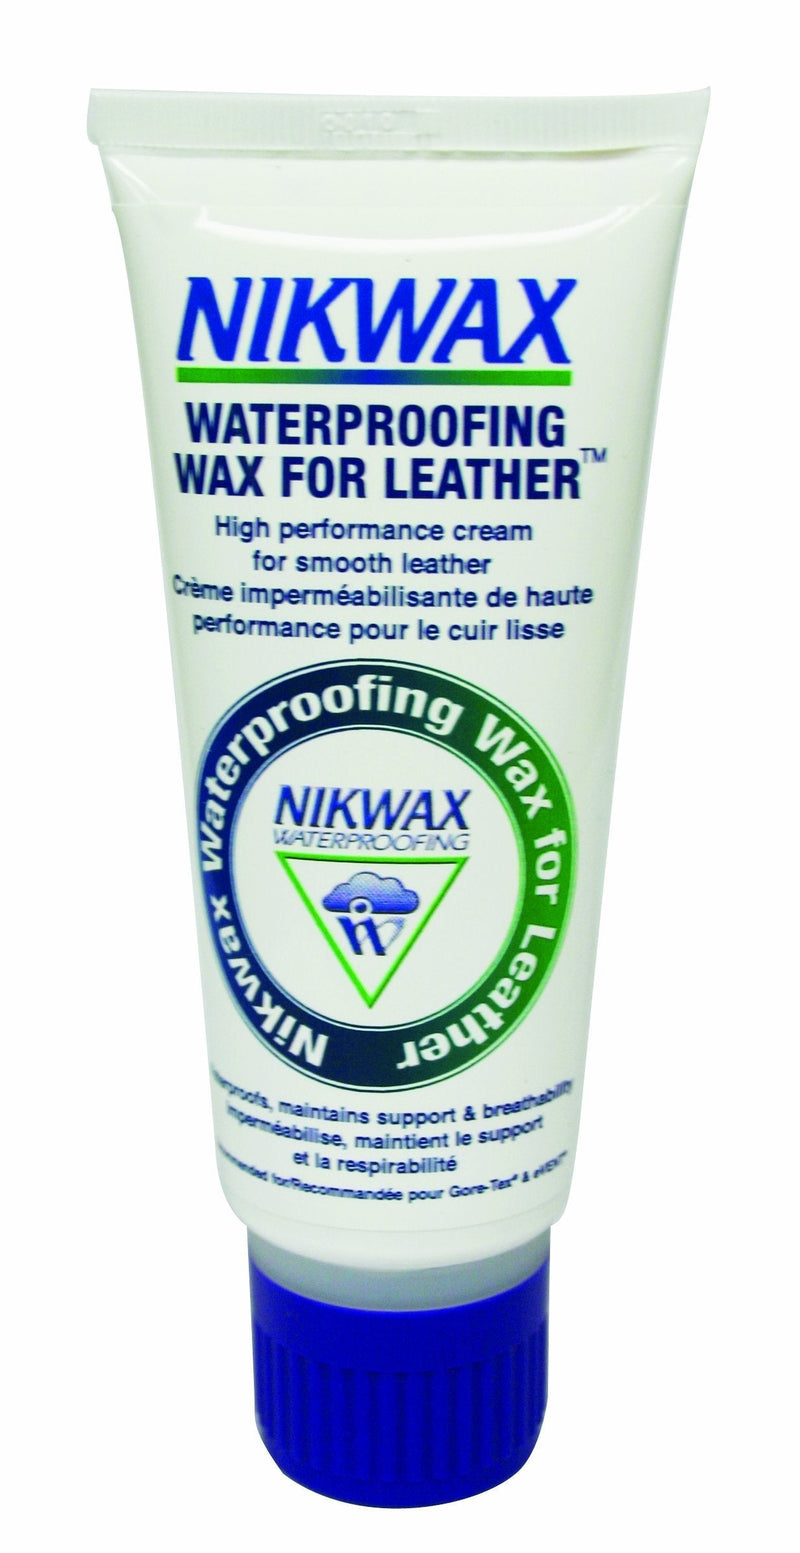 [AUSTRALIA] - Nikwax Waterproofing Wax for Leather 